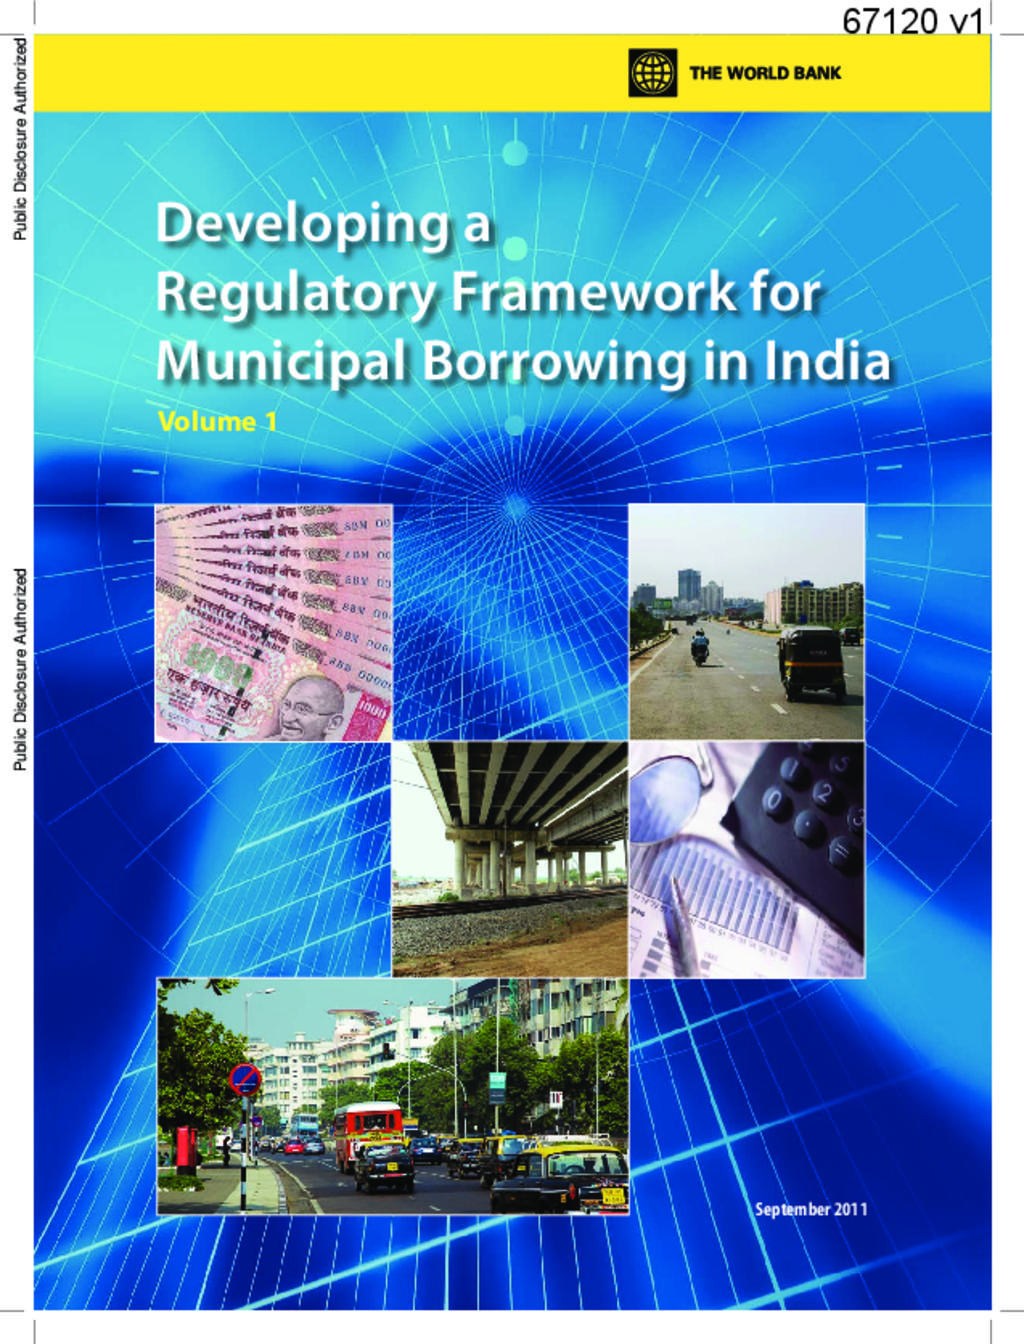 Developing a Regulatory Framework for Municipal Borrowing in India